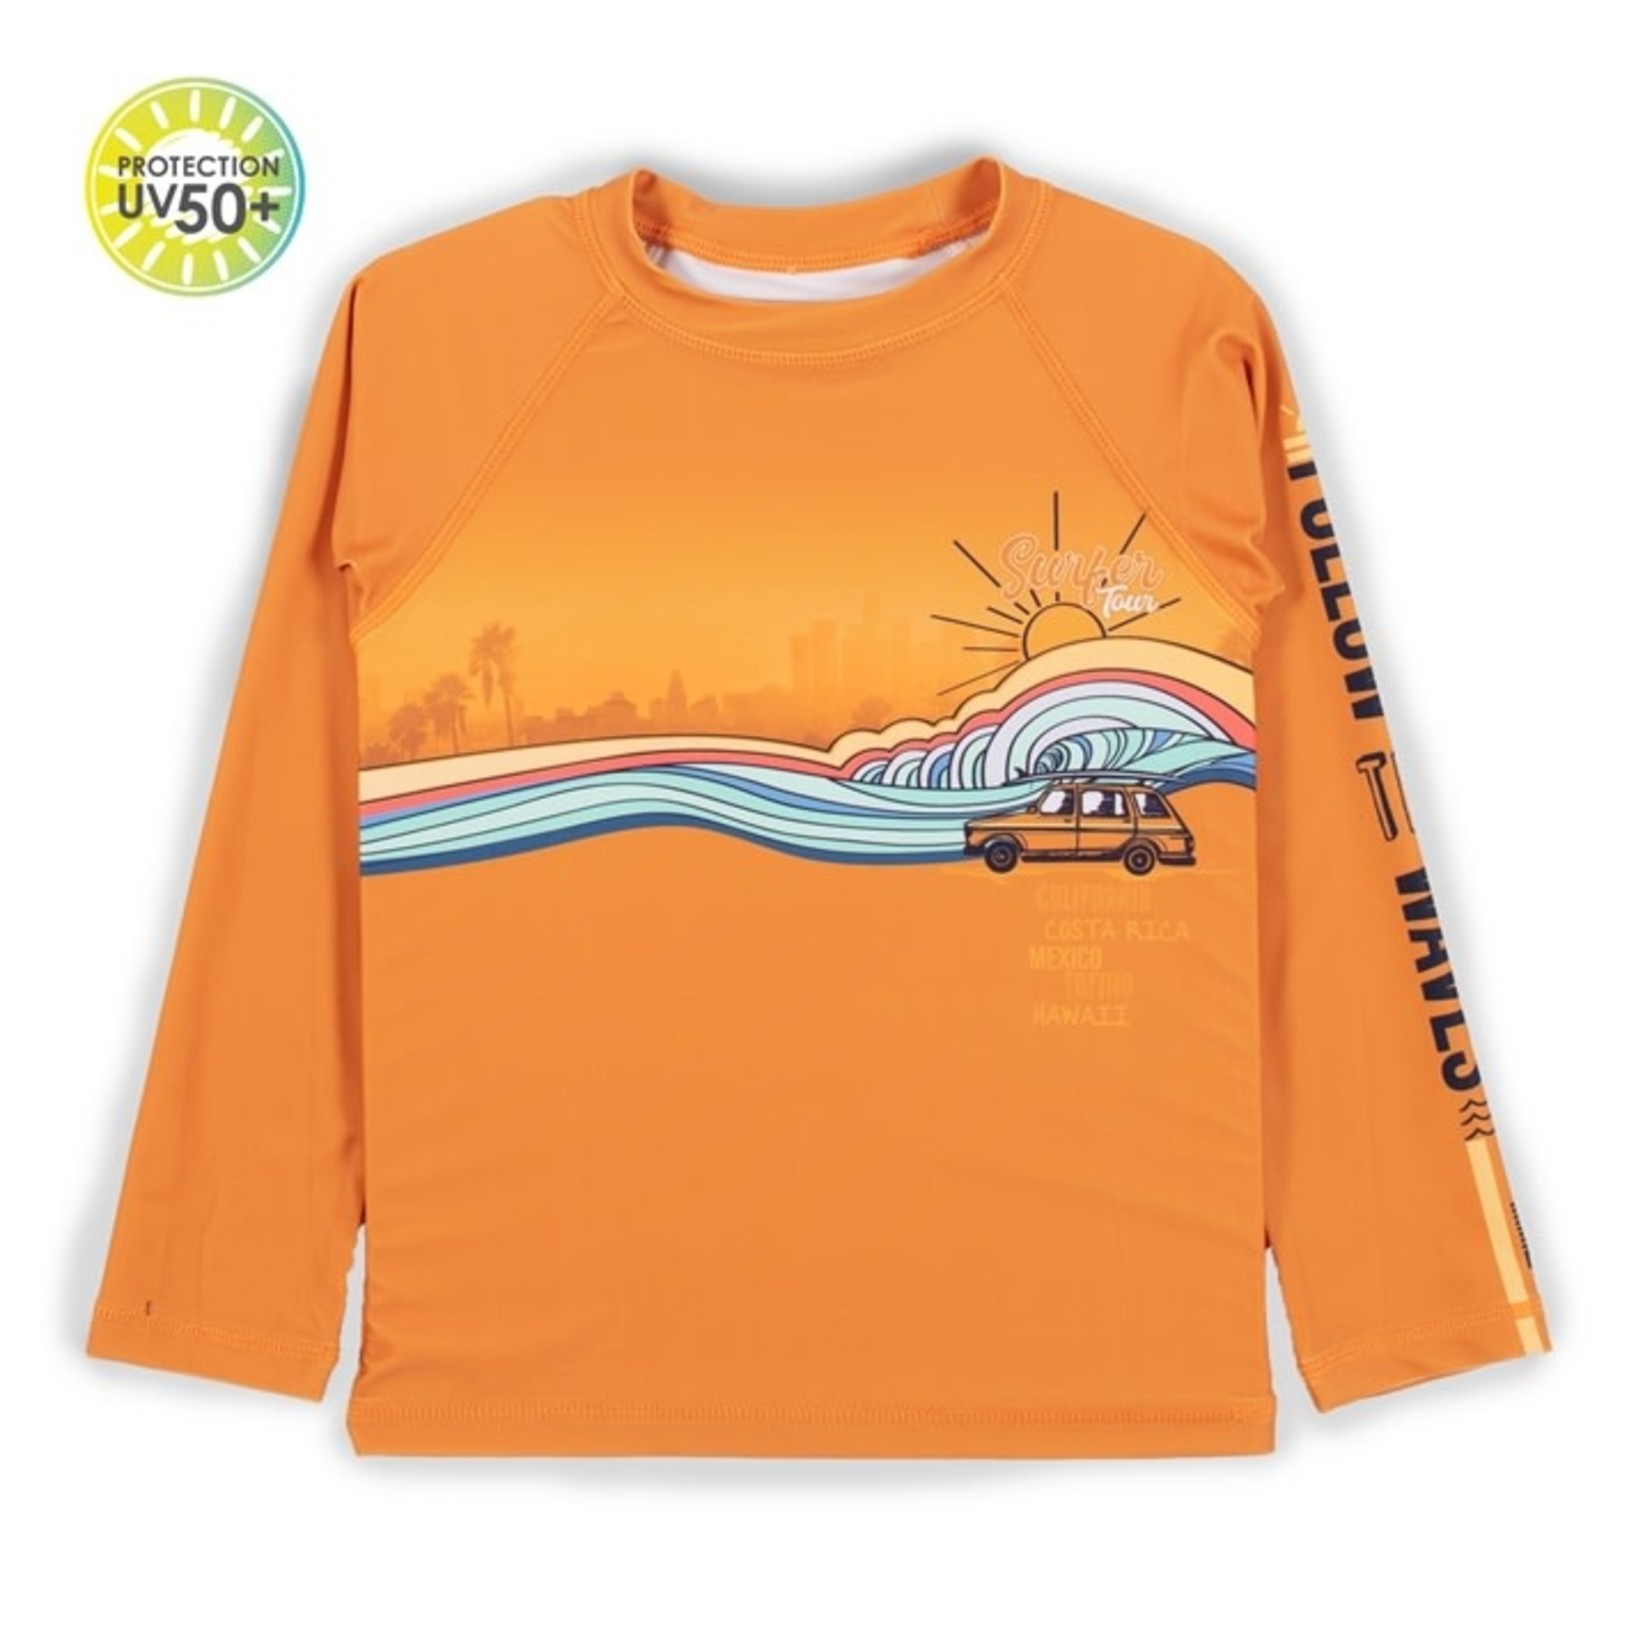 Nanö NANÖ -  Longsleeve orange rashguard with car on beach print